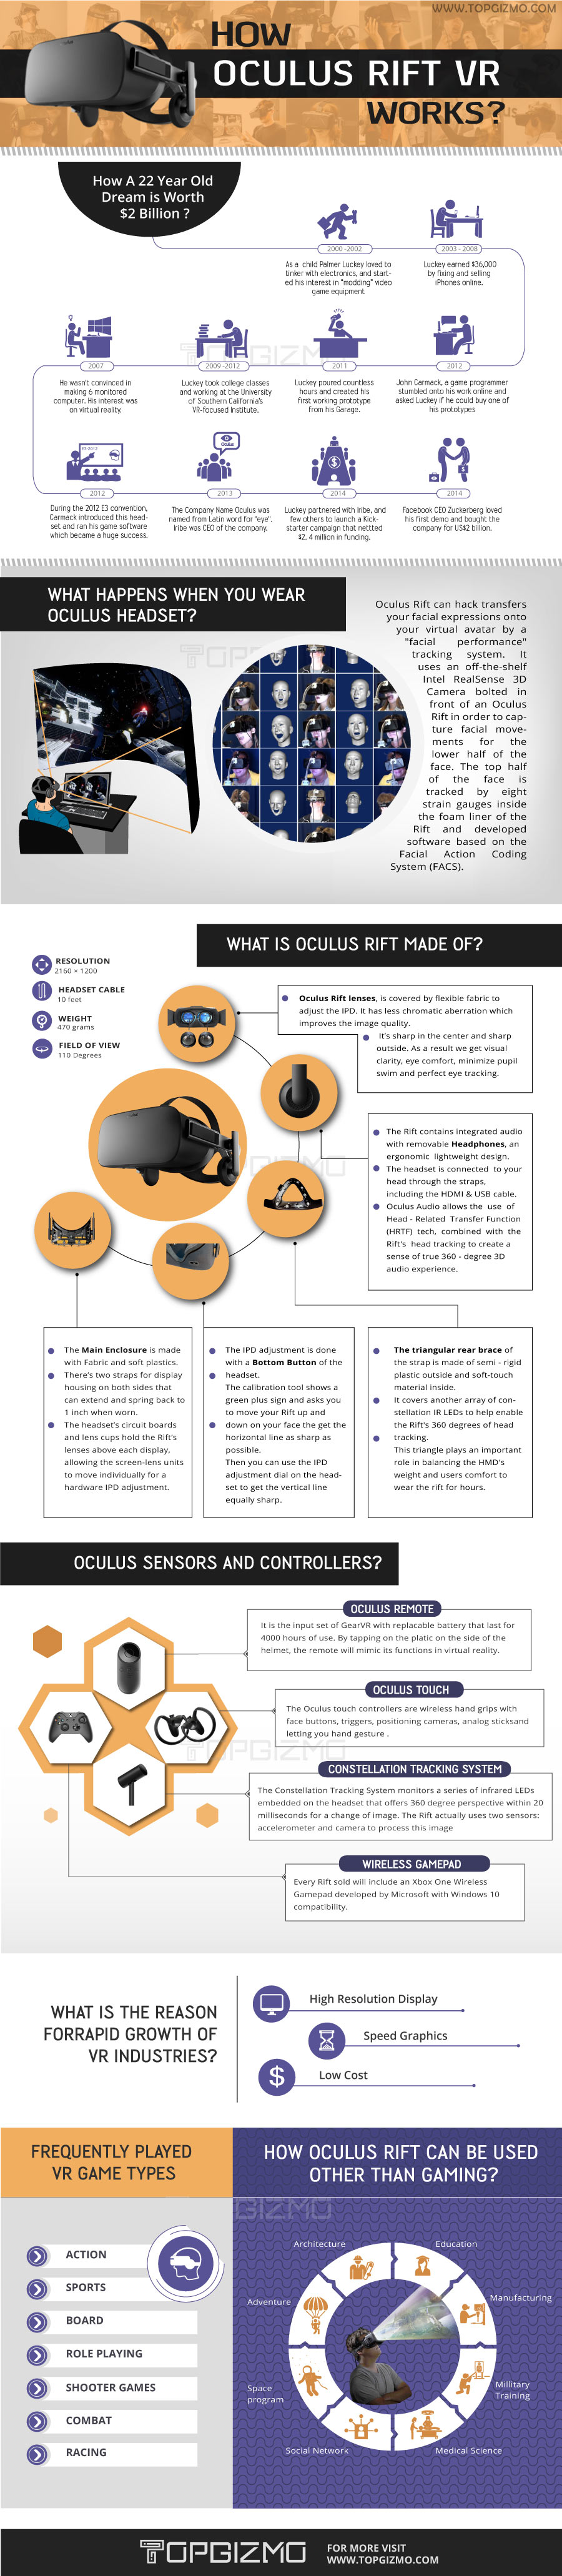 how-does-oculus-rift-vr-work-infographic-www.topgizmo.com_